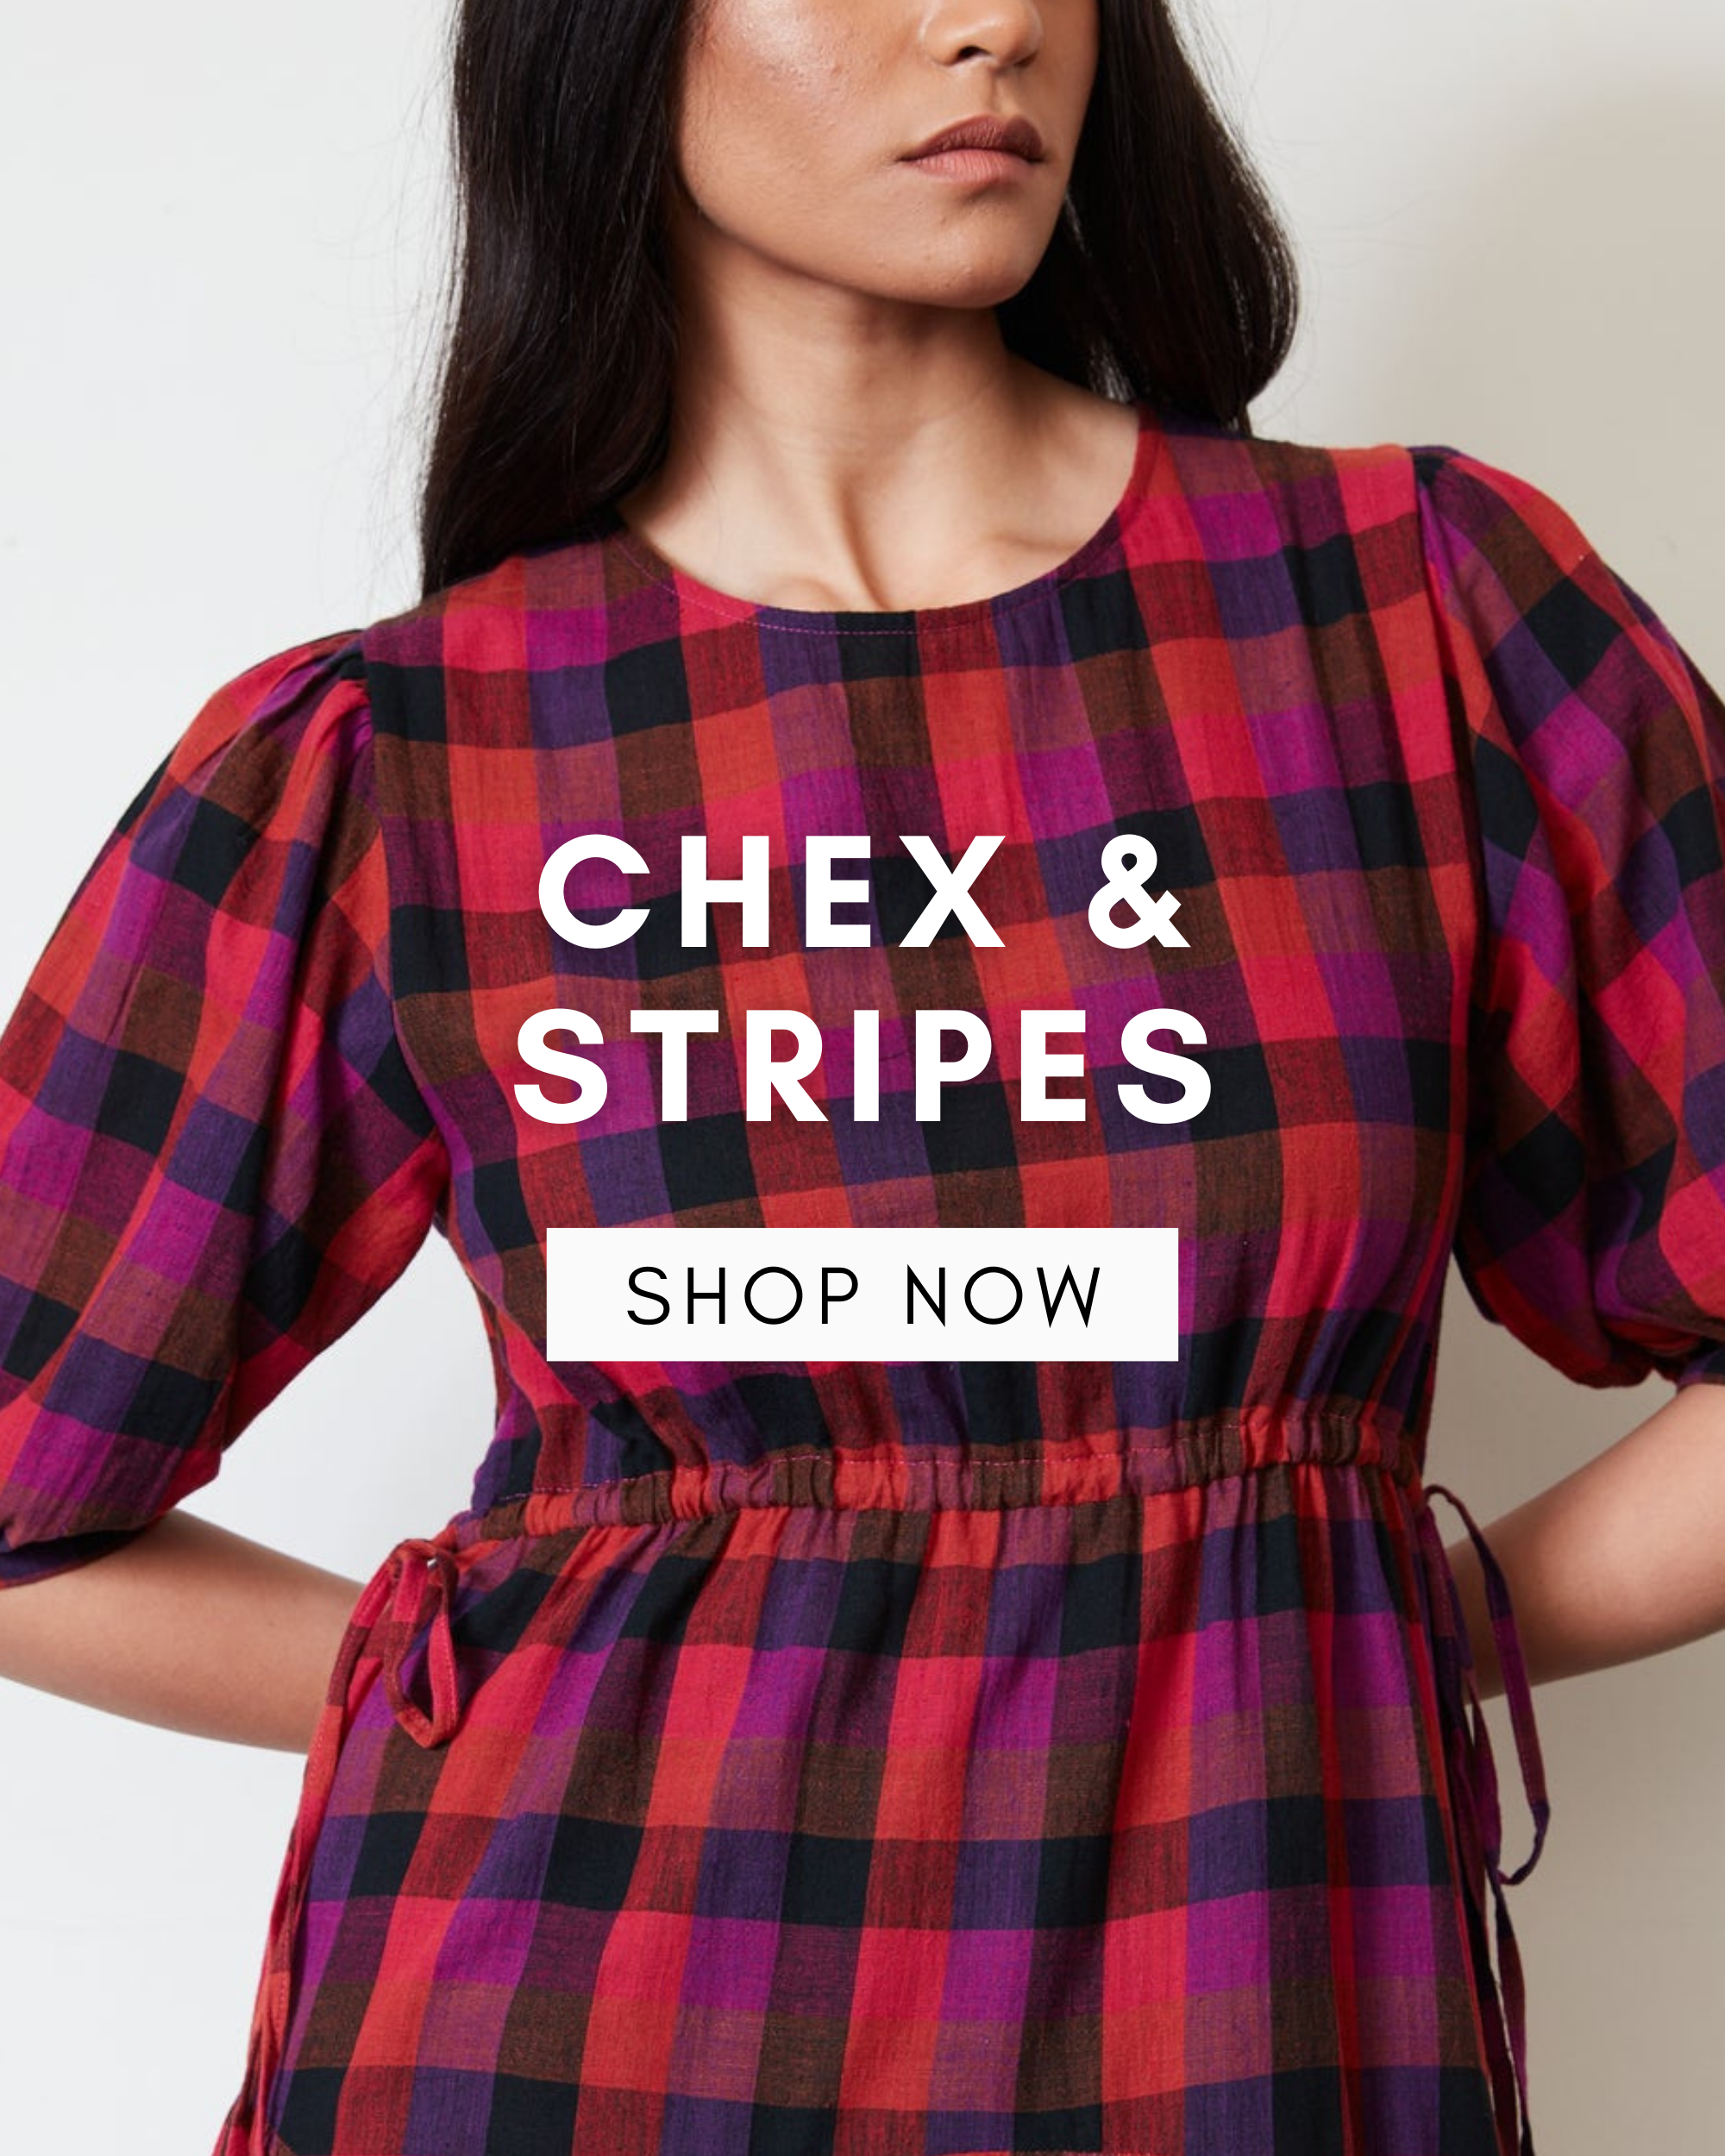 Chex & Stripes